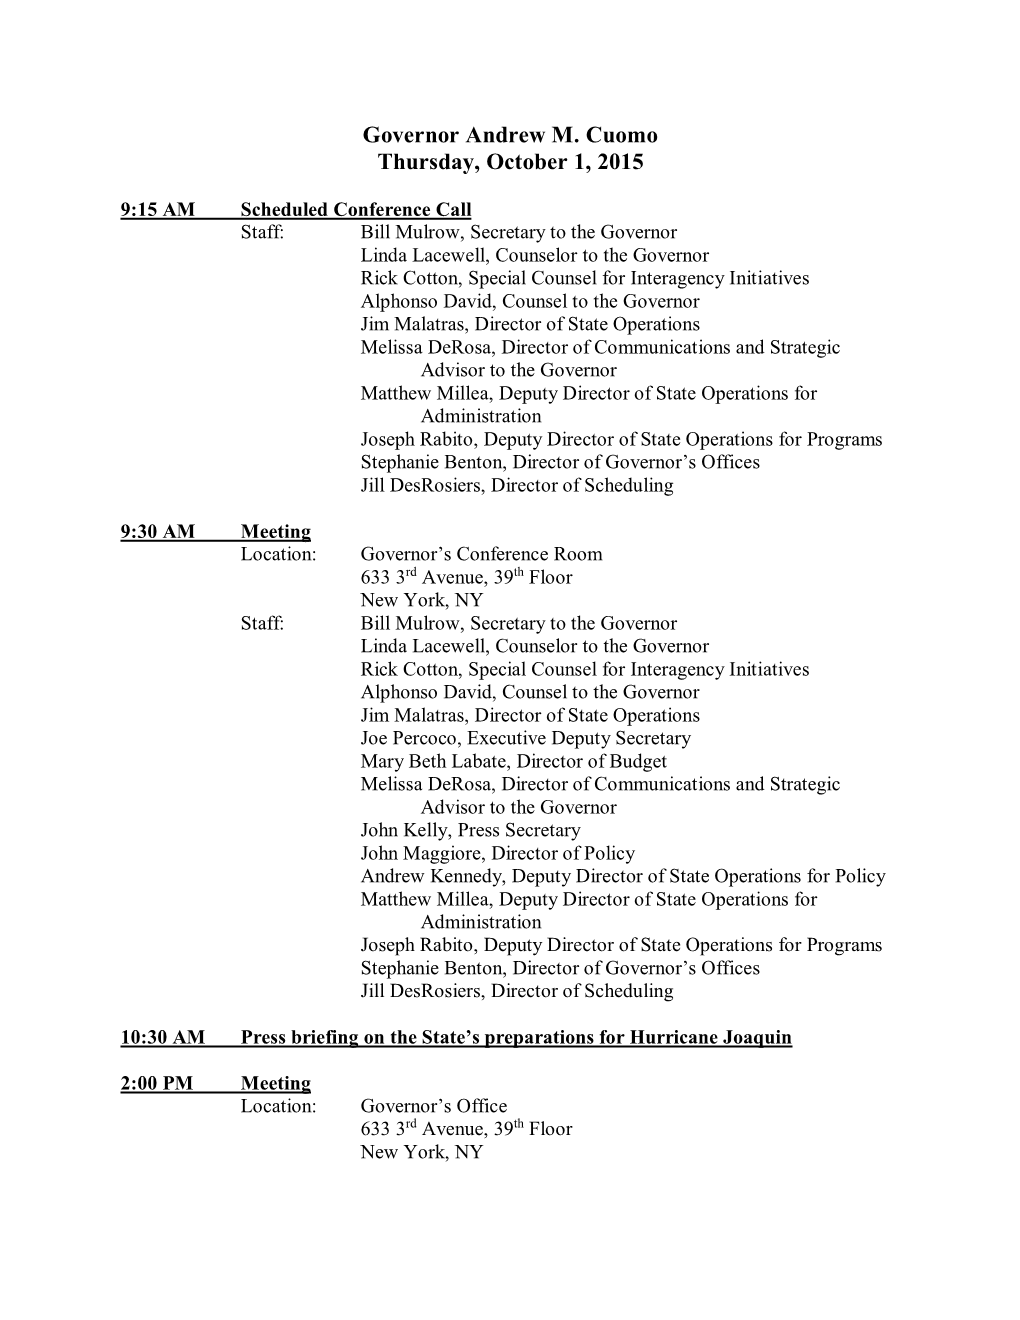 Governor Andrew M. Cuomo Thursday, October 1, 2015